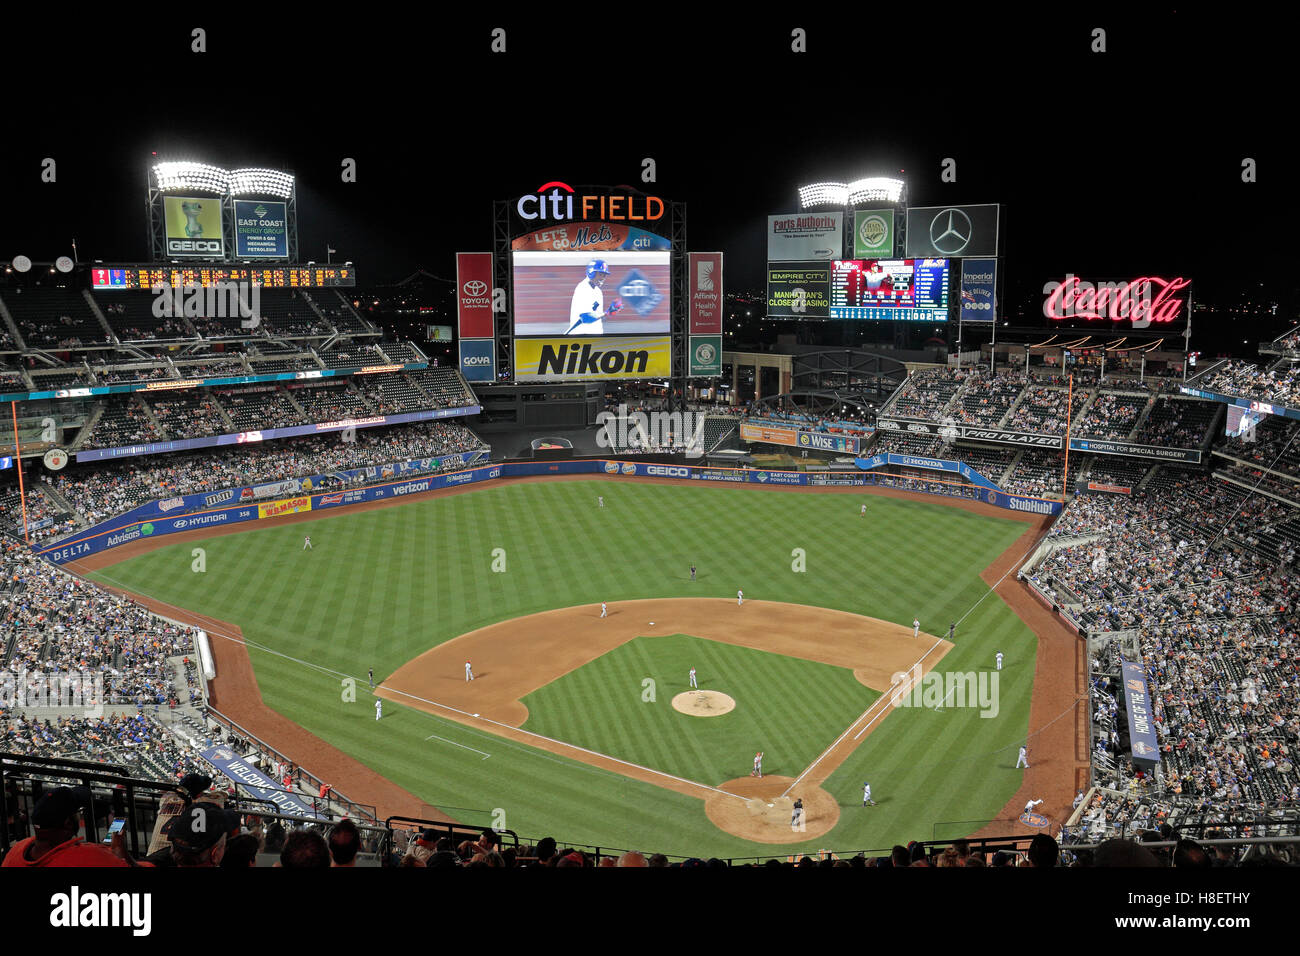 Vue de nuit du Citi Field, le stade de la MLB home New York Mets lors d'un jeu de 2016, New York, United States. Banque D'Images